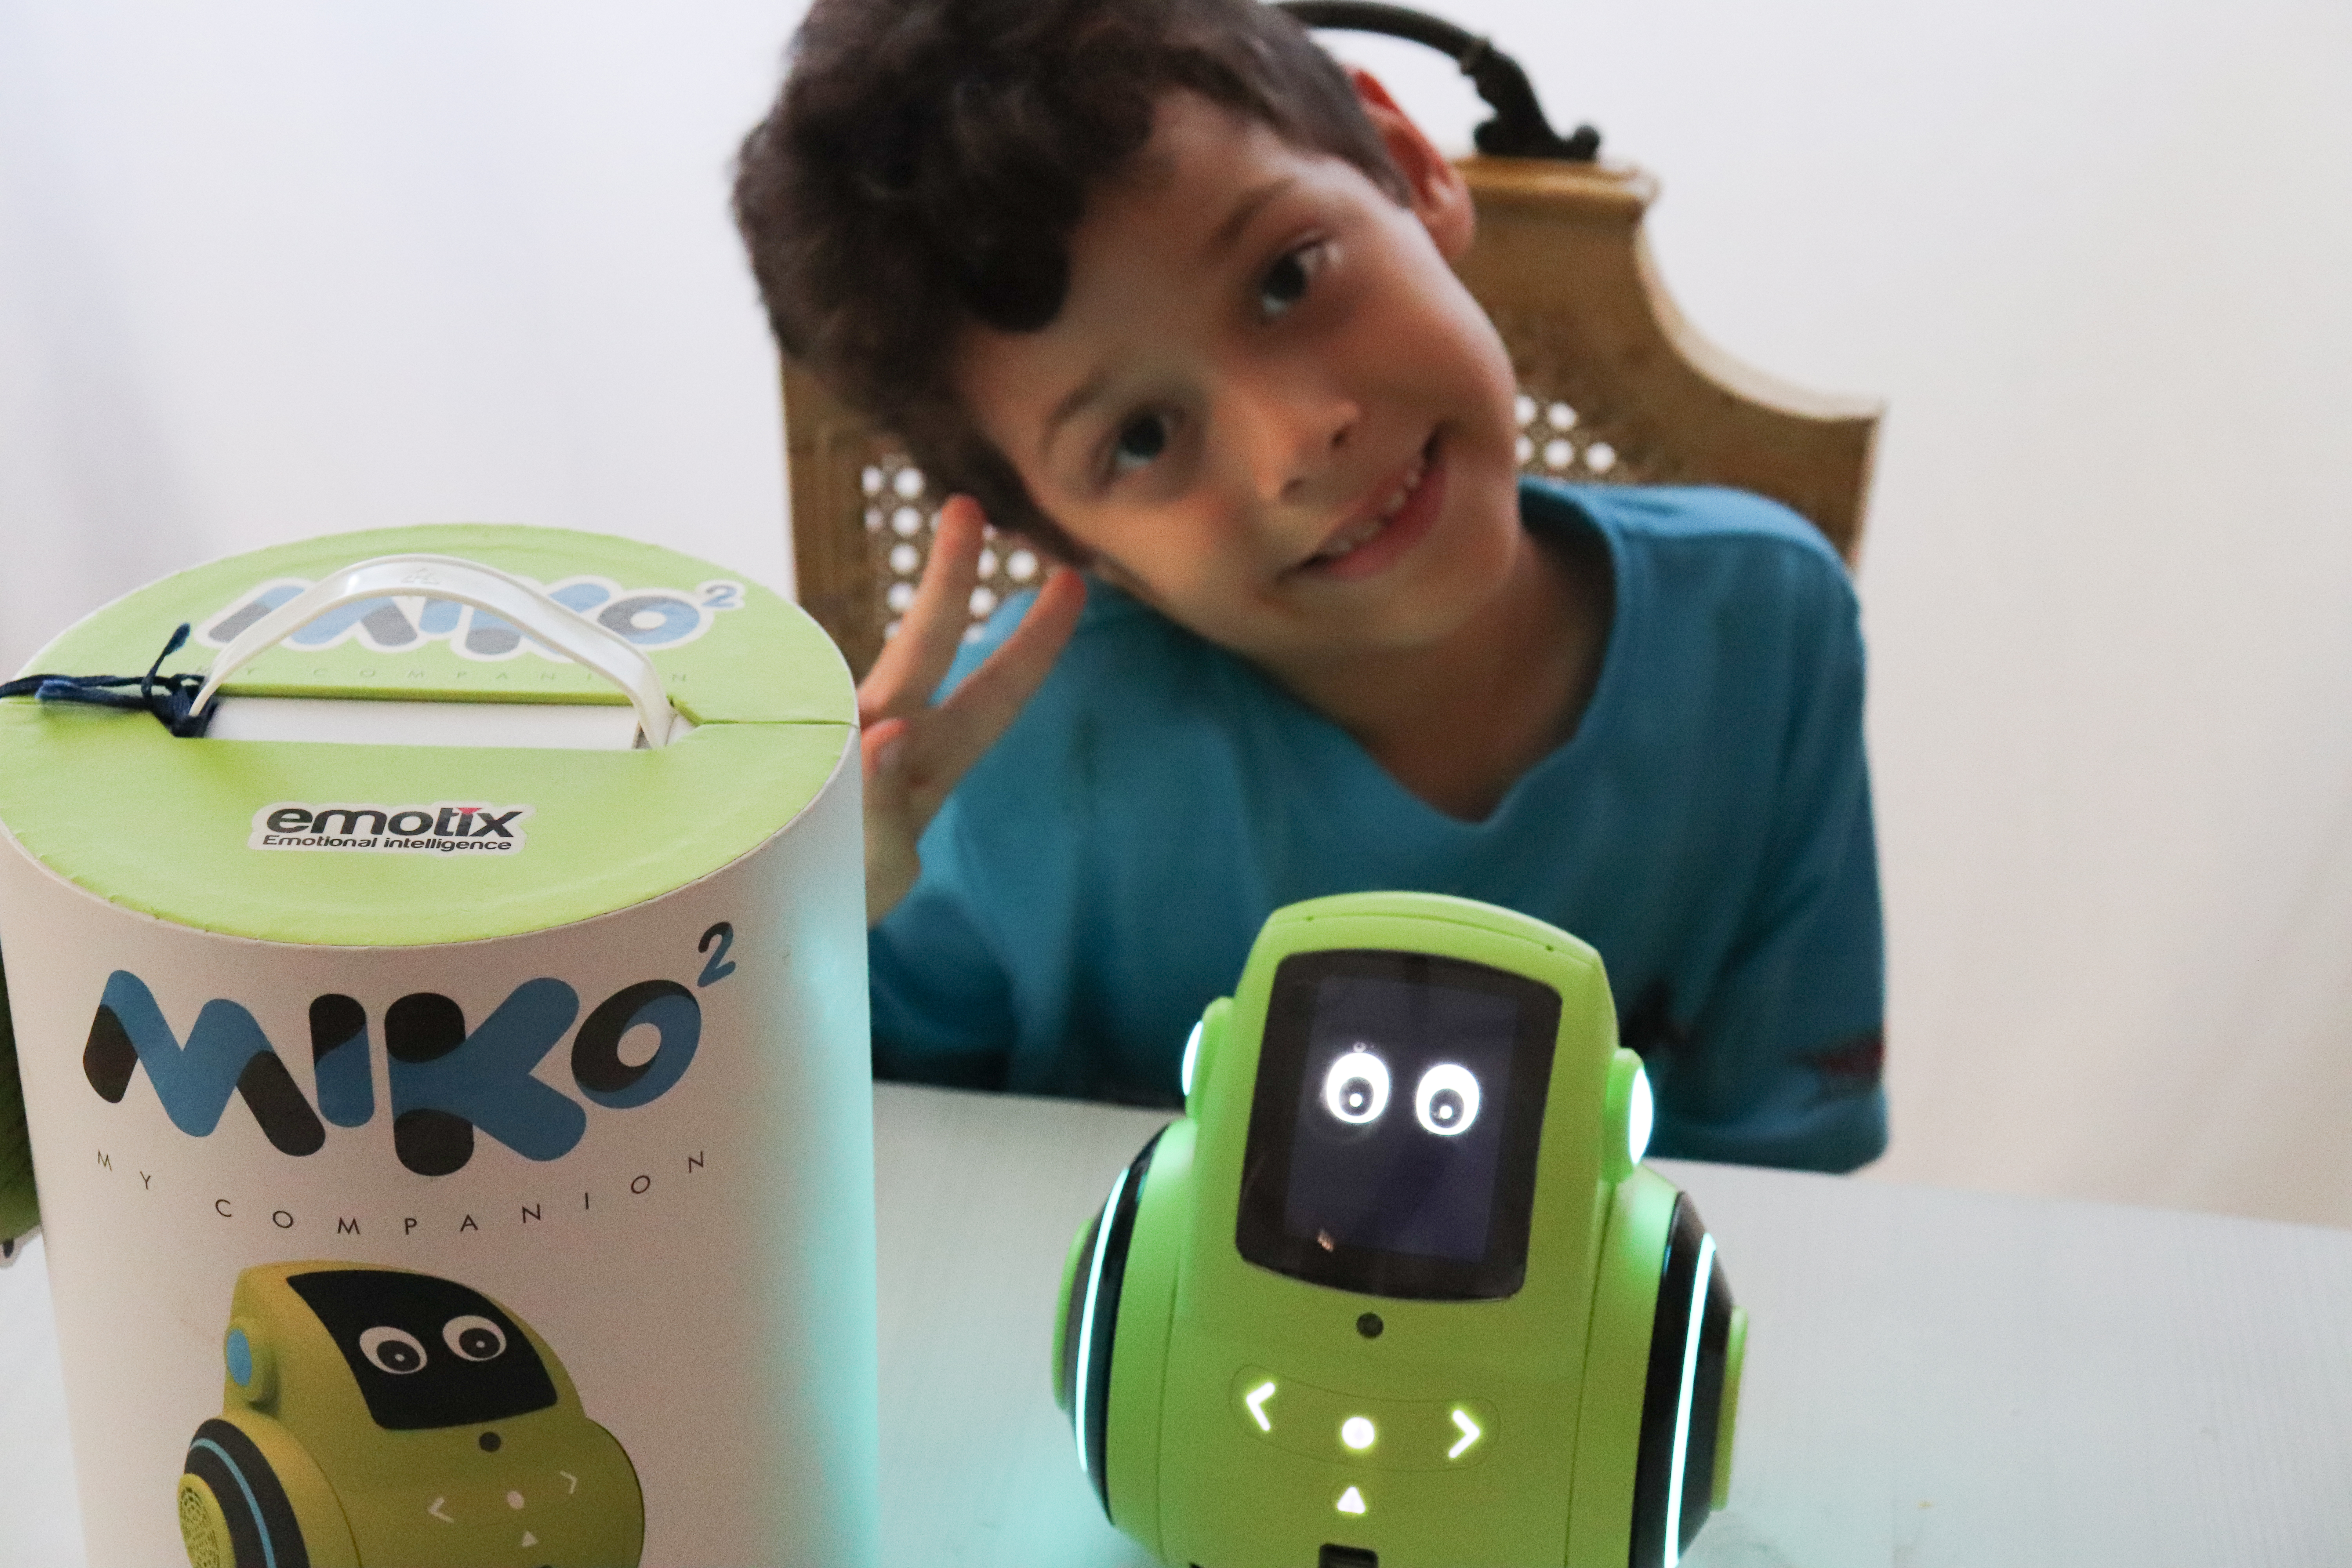 miko 2 robot Kids education tool brand New green 